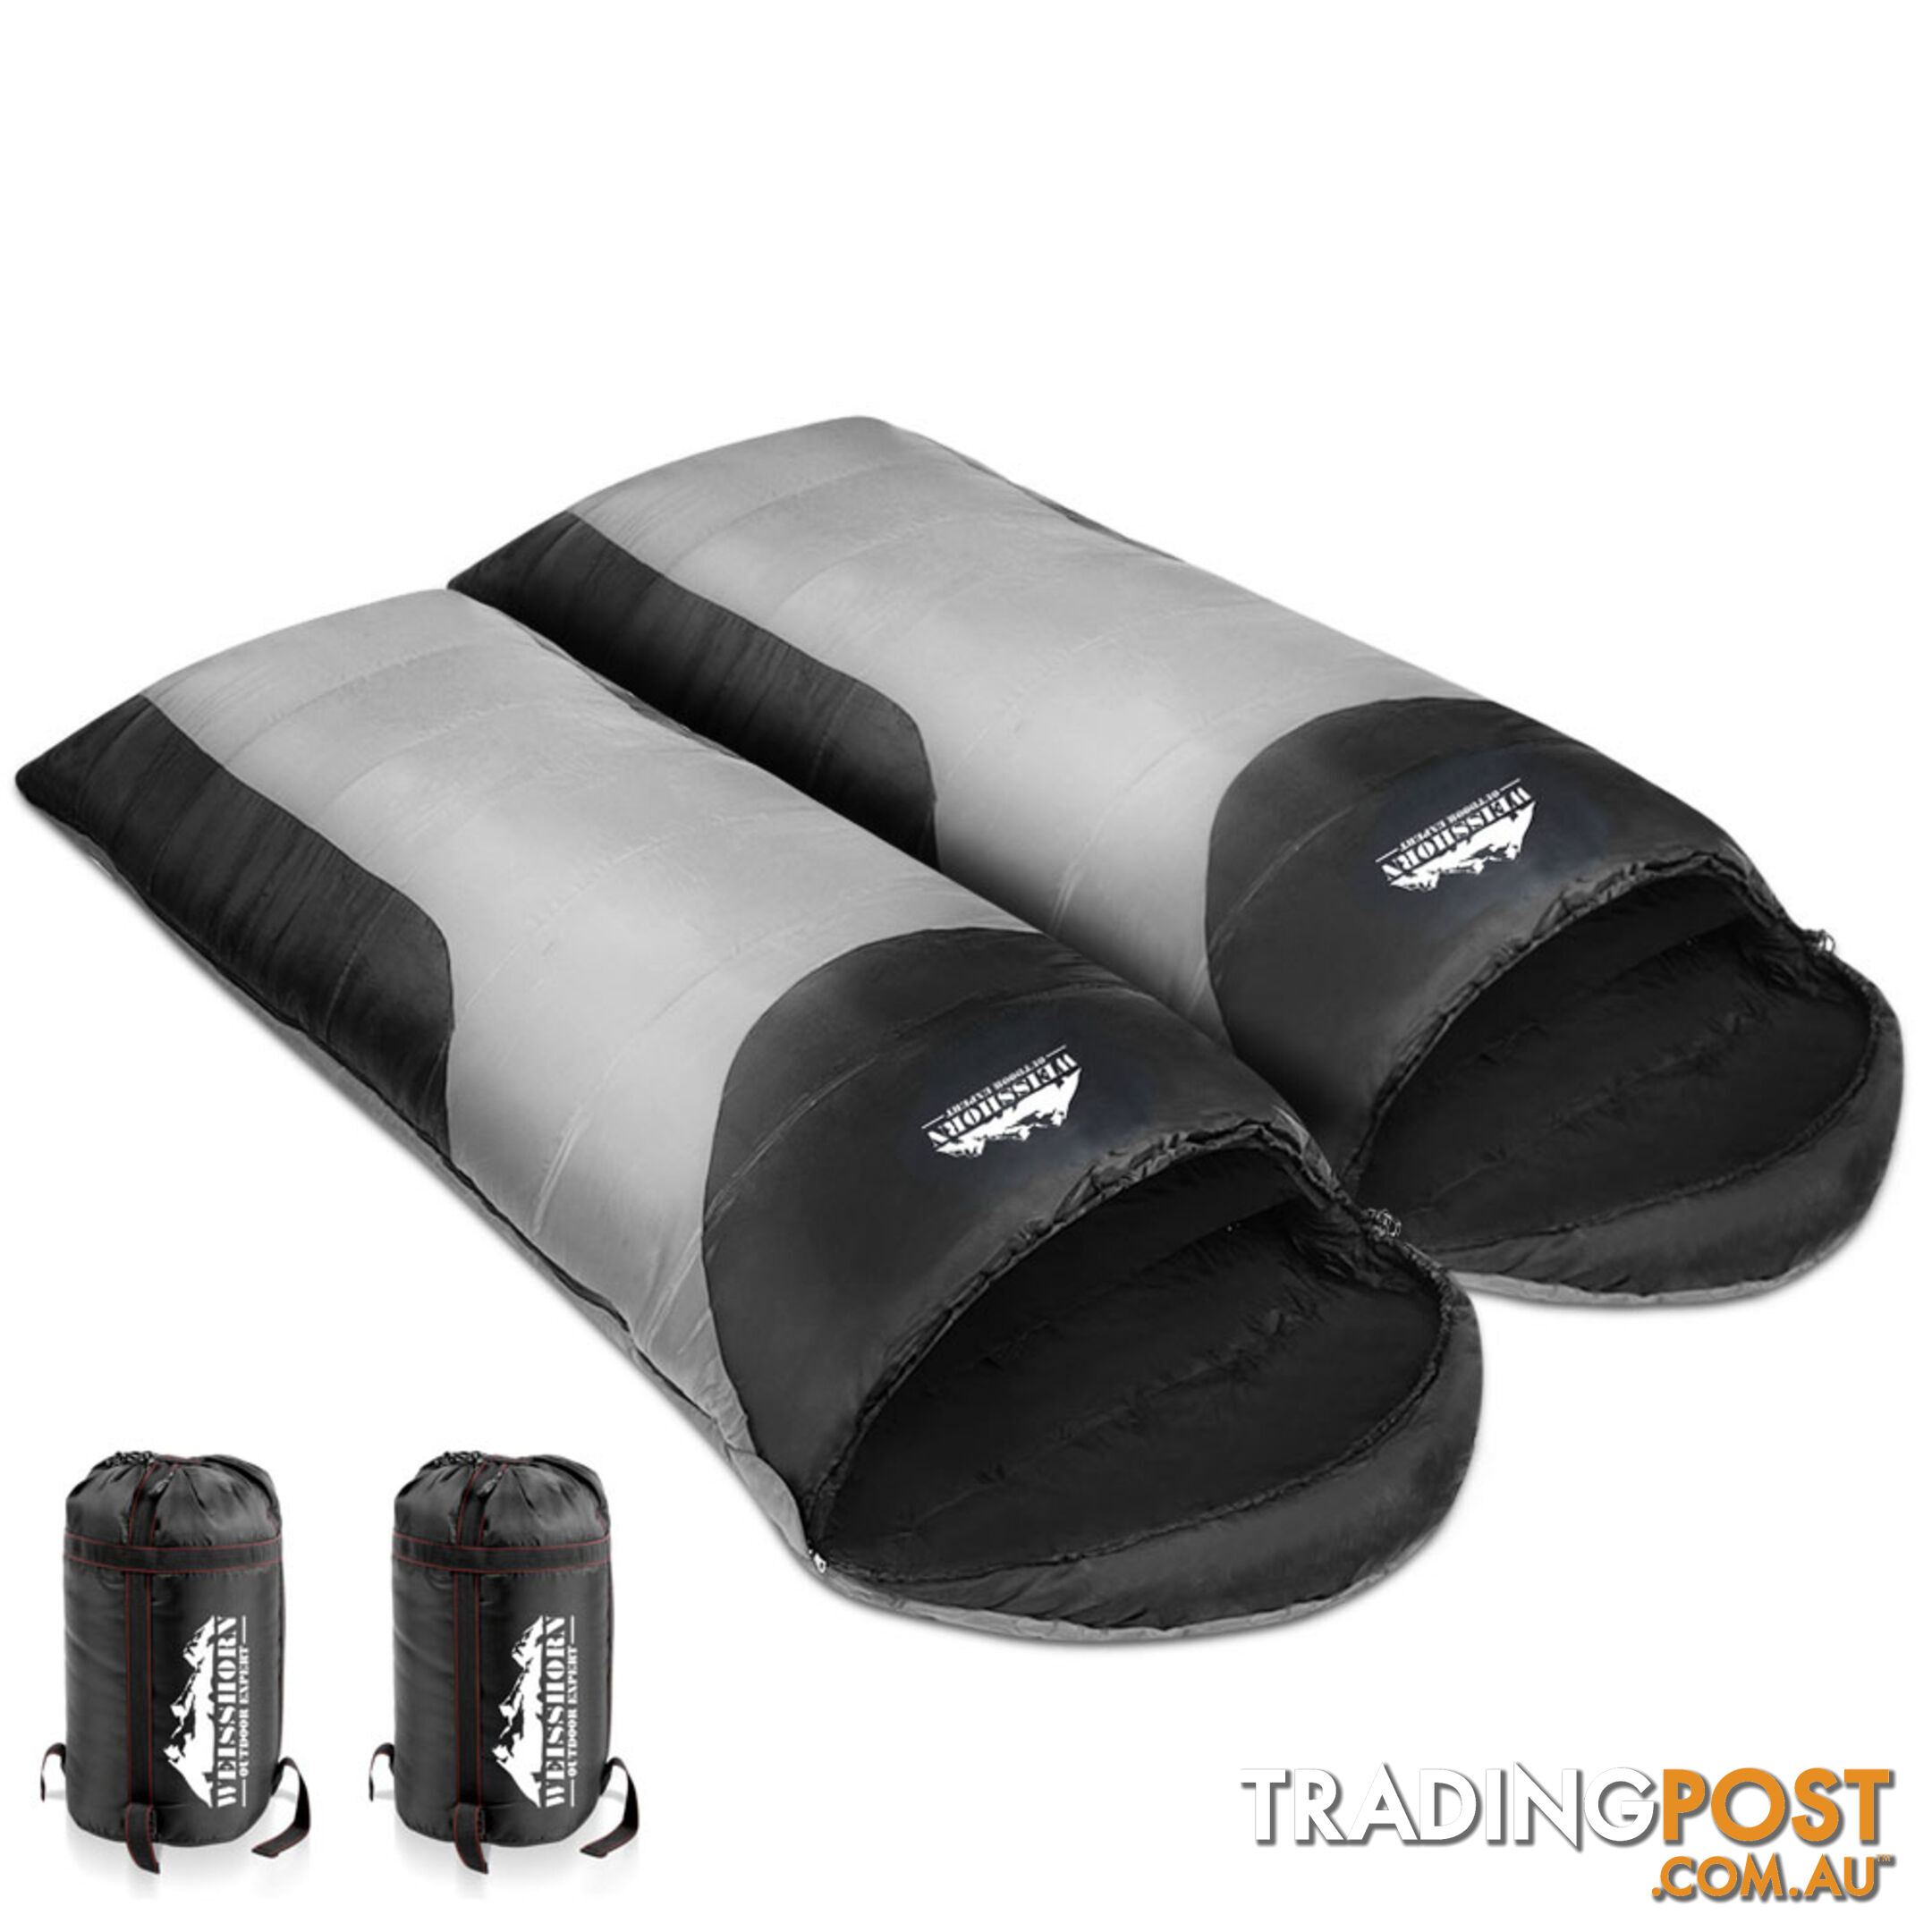 2 x Sleeping Bag Twin Outdoor Camping Thermal Tent Hiking -10_ Grey Black